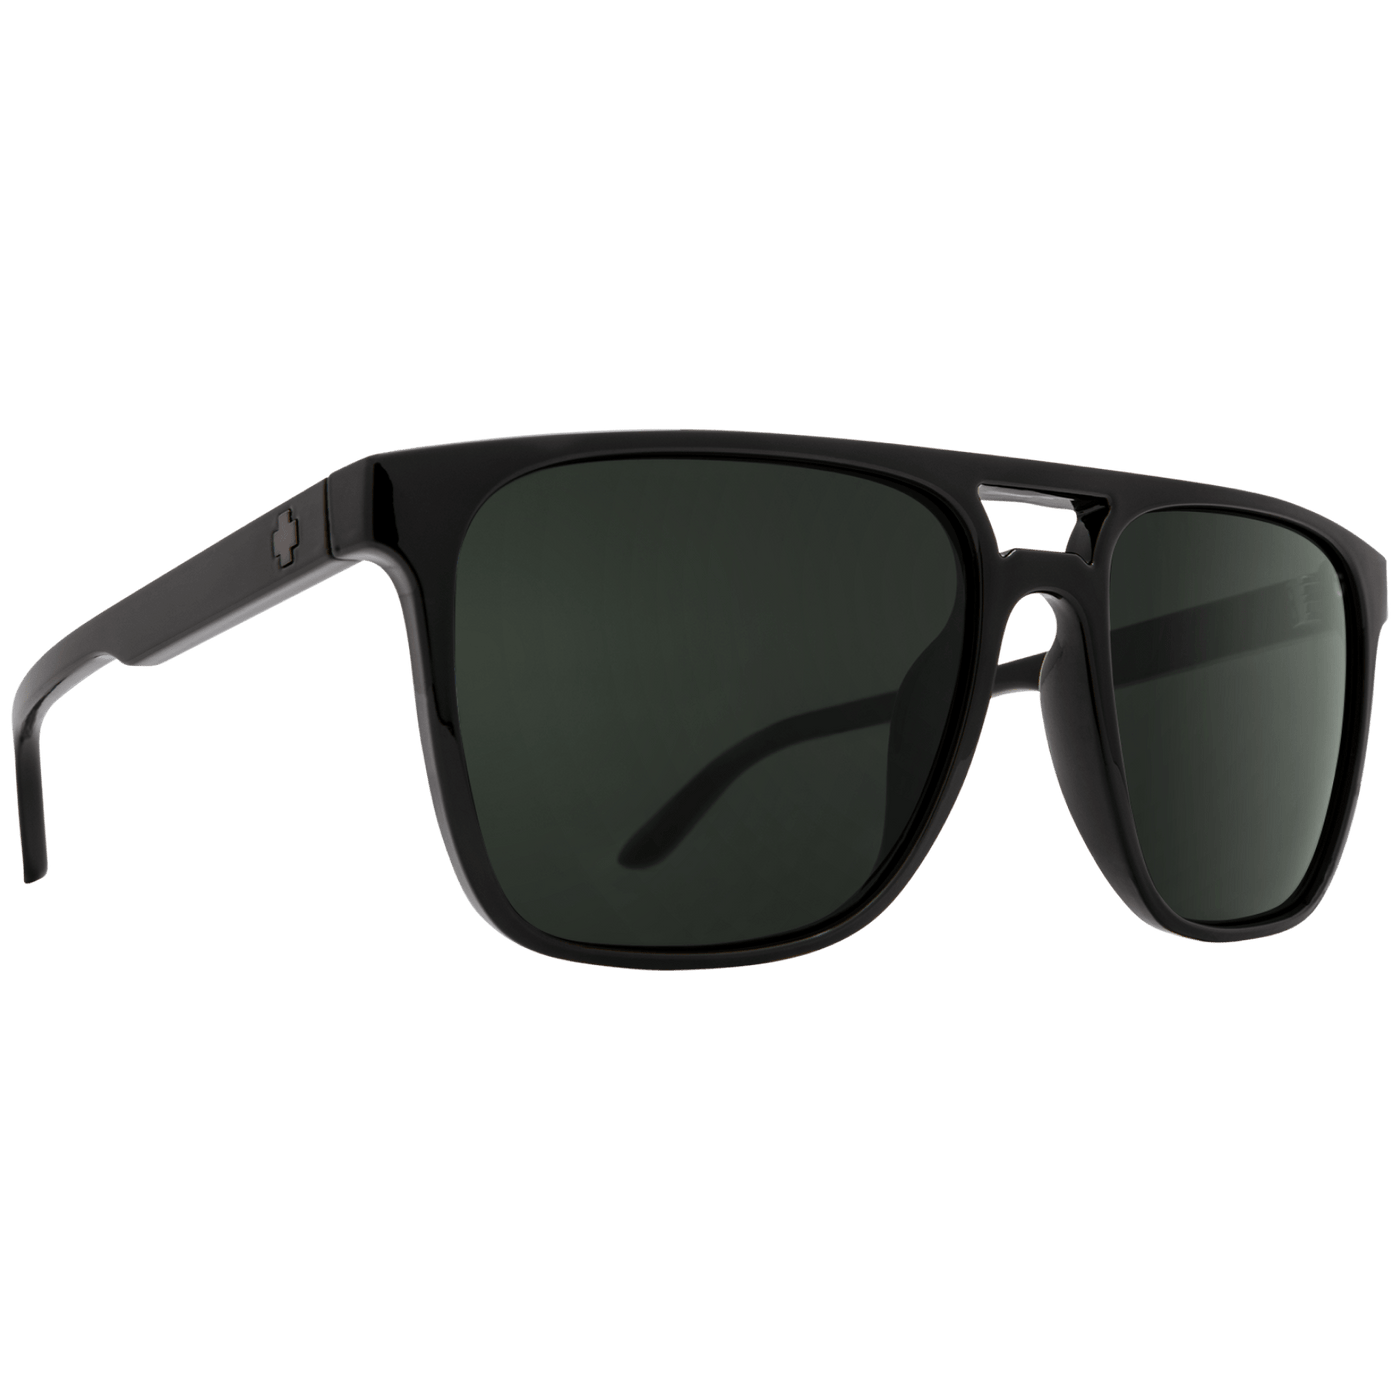 SPY CZAR Polarized Sunglasses, Happy Lens - Gray/Green 8Lines Shop - Fast Shipping